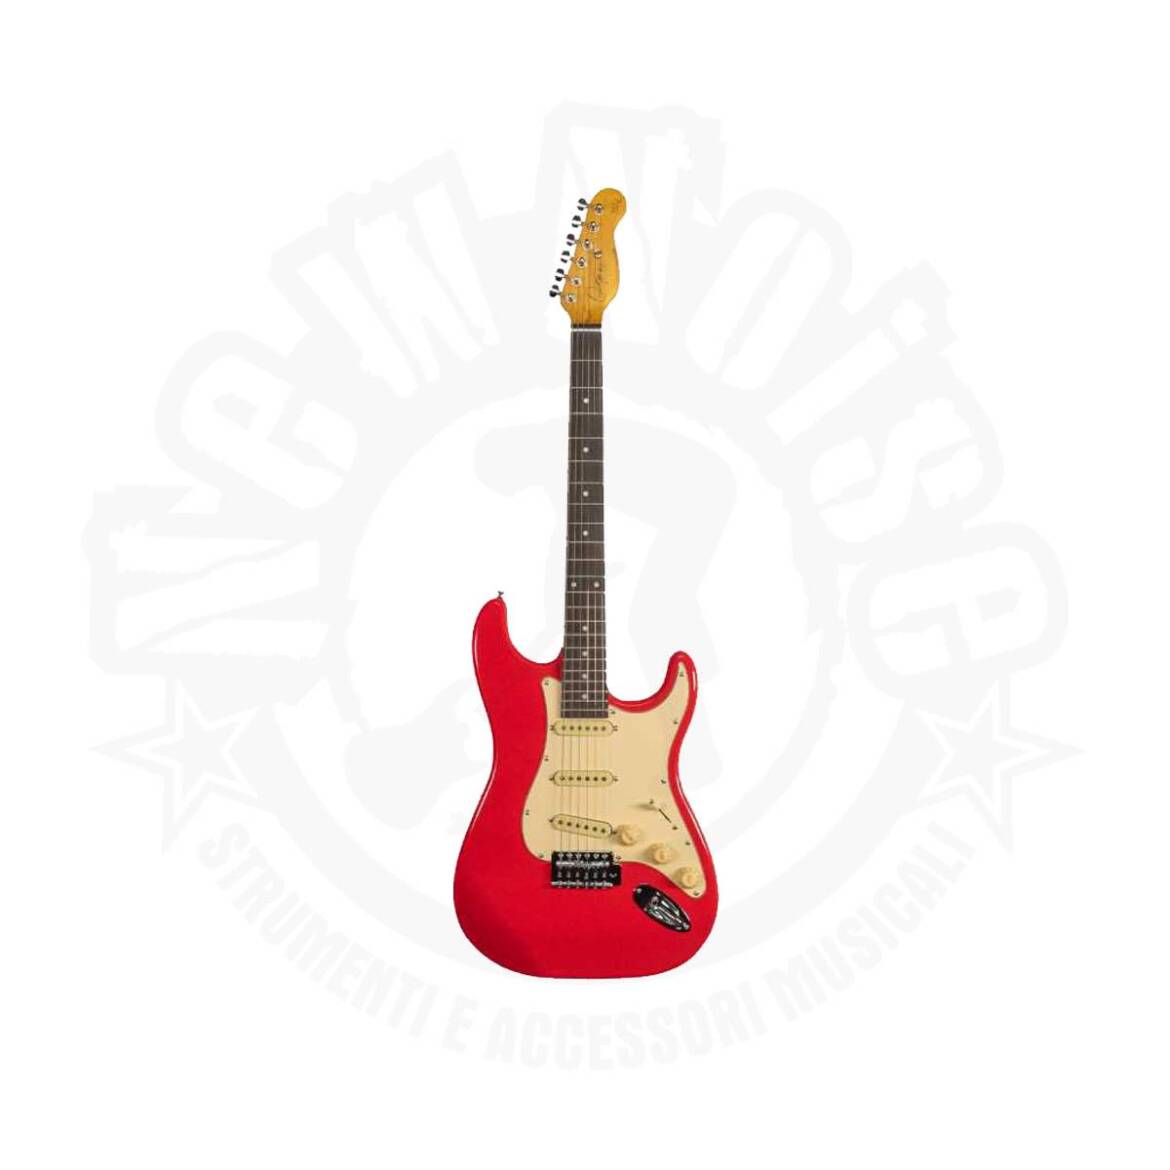 OQAN – QGE-RST2 – RED – Chitarra elettrica stile stratocaster finitura rossa vintage